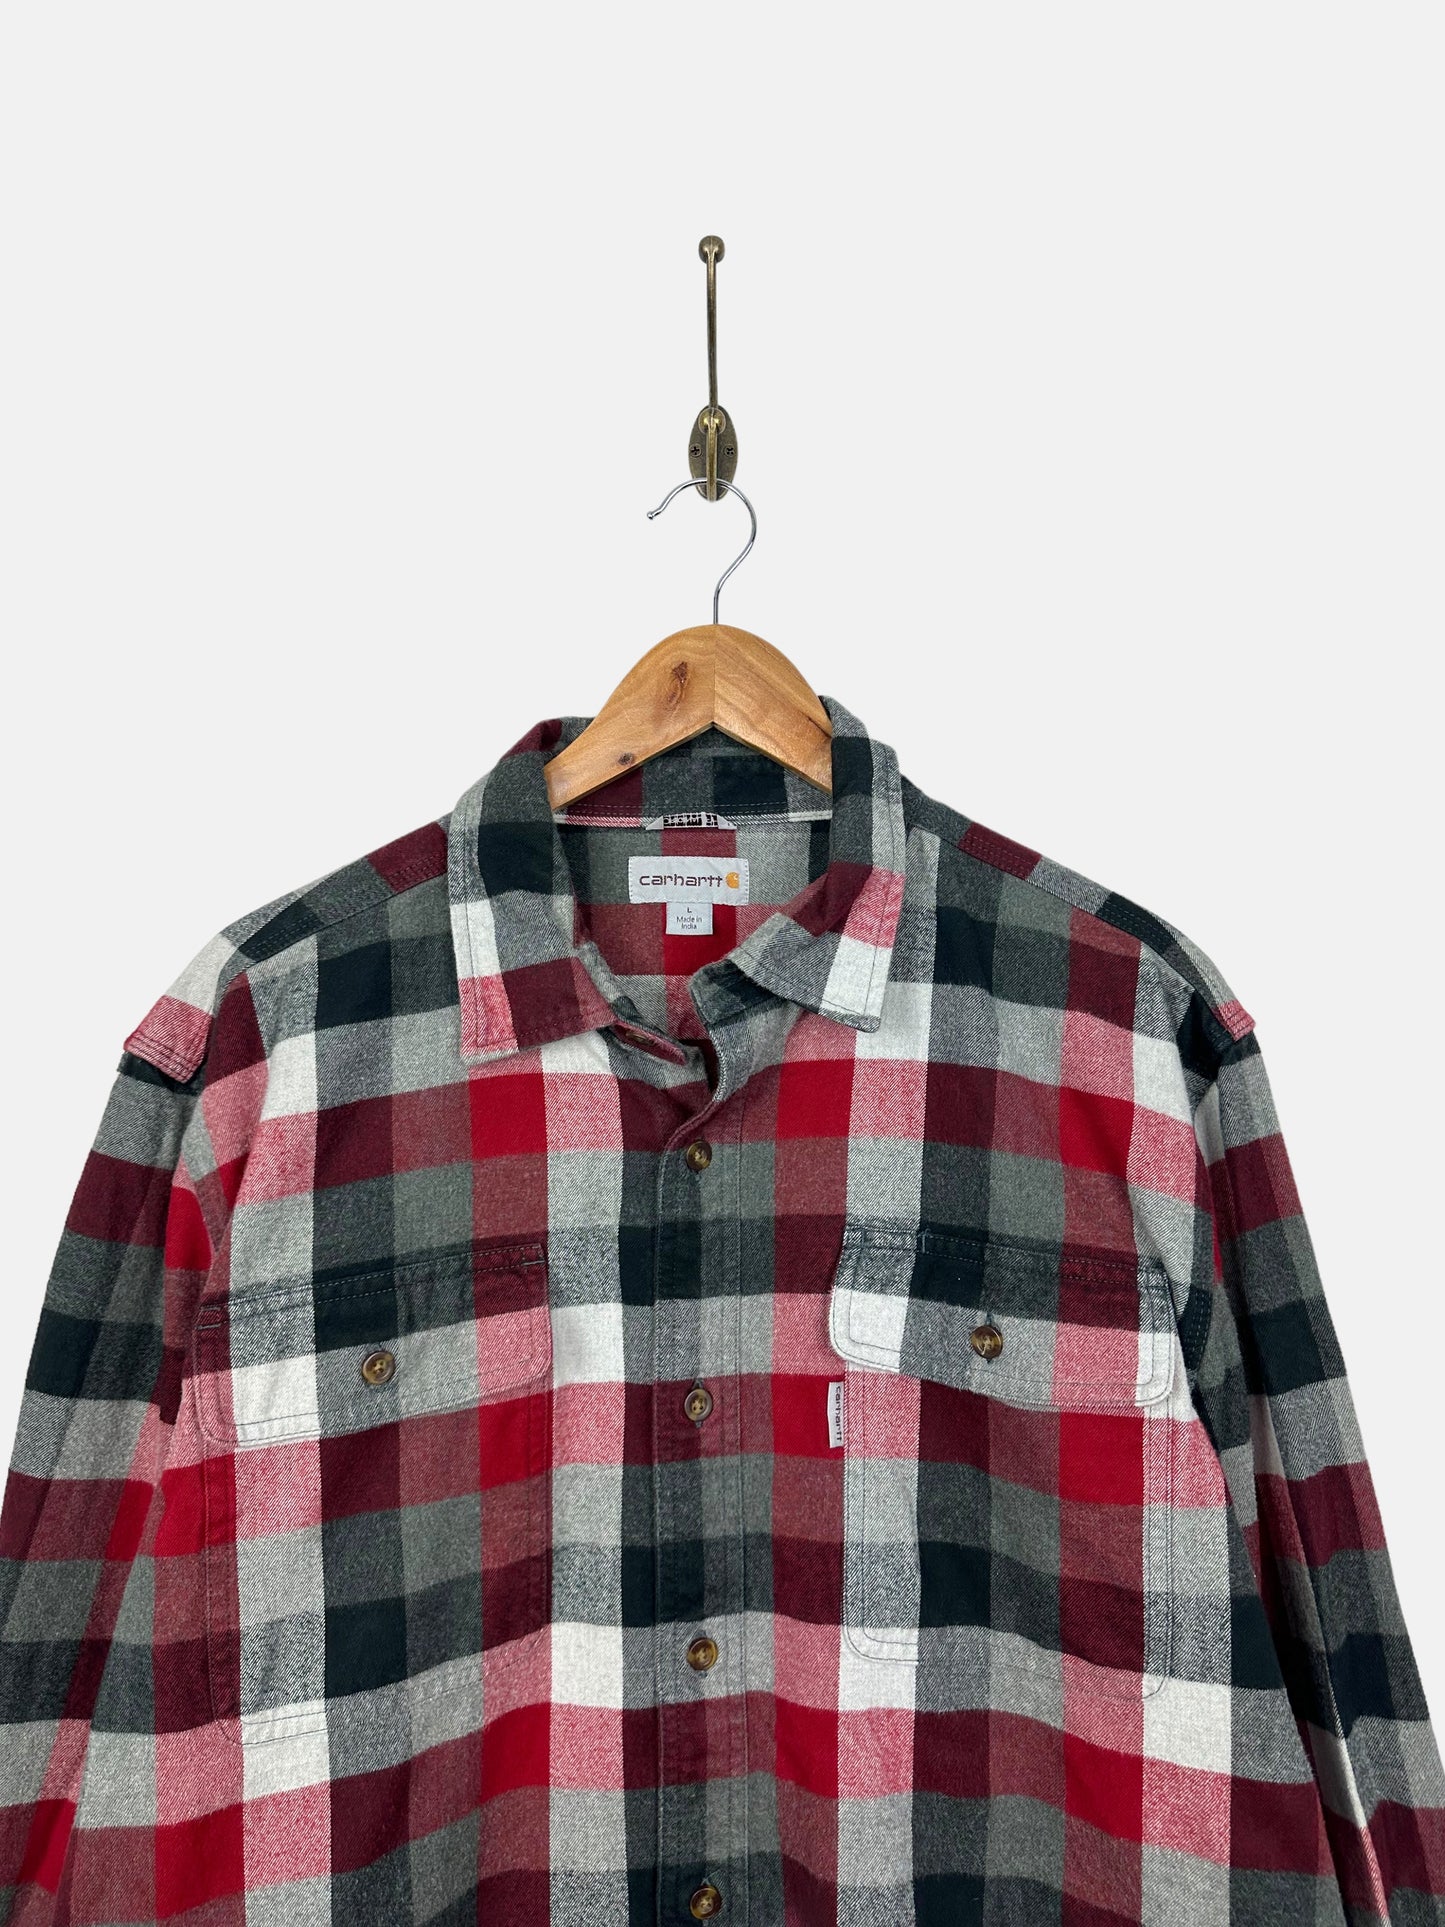 90's Carhartt Button-Up Flannel Shirt Size L